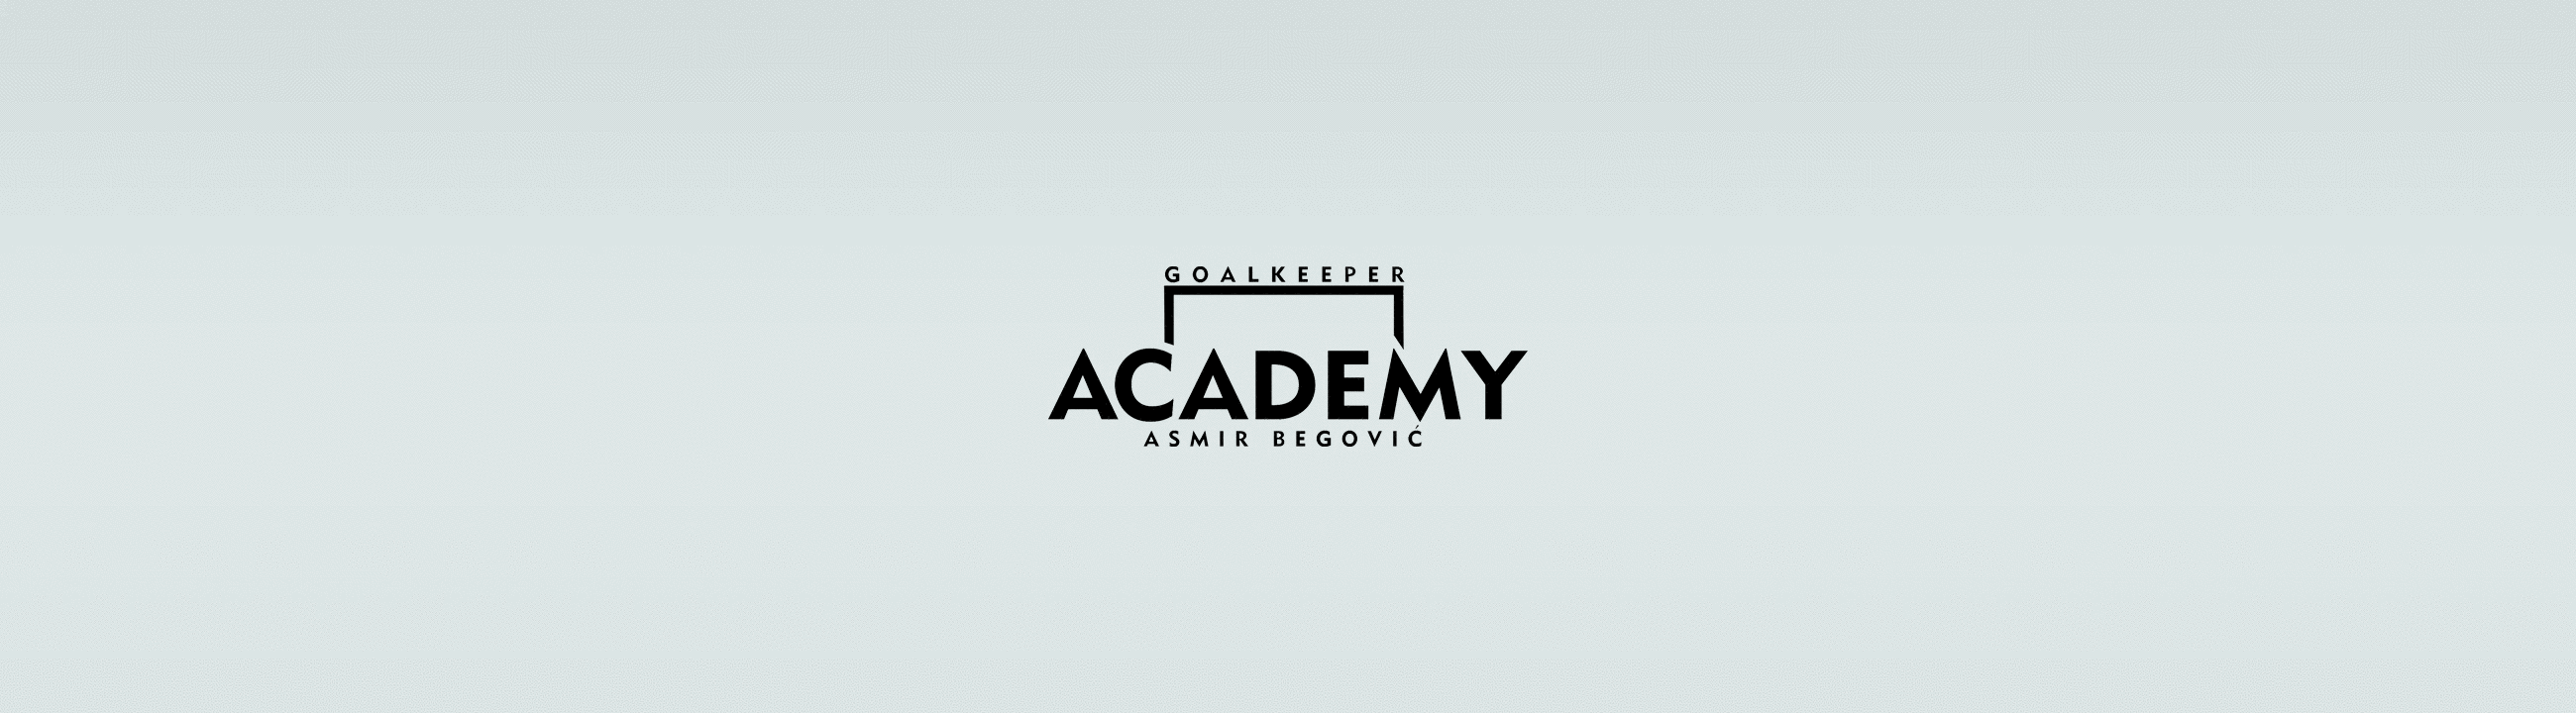 Asmir Begovic GK Academy